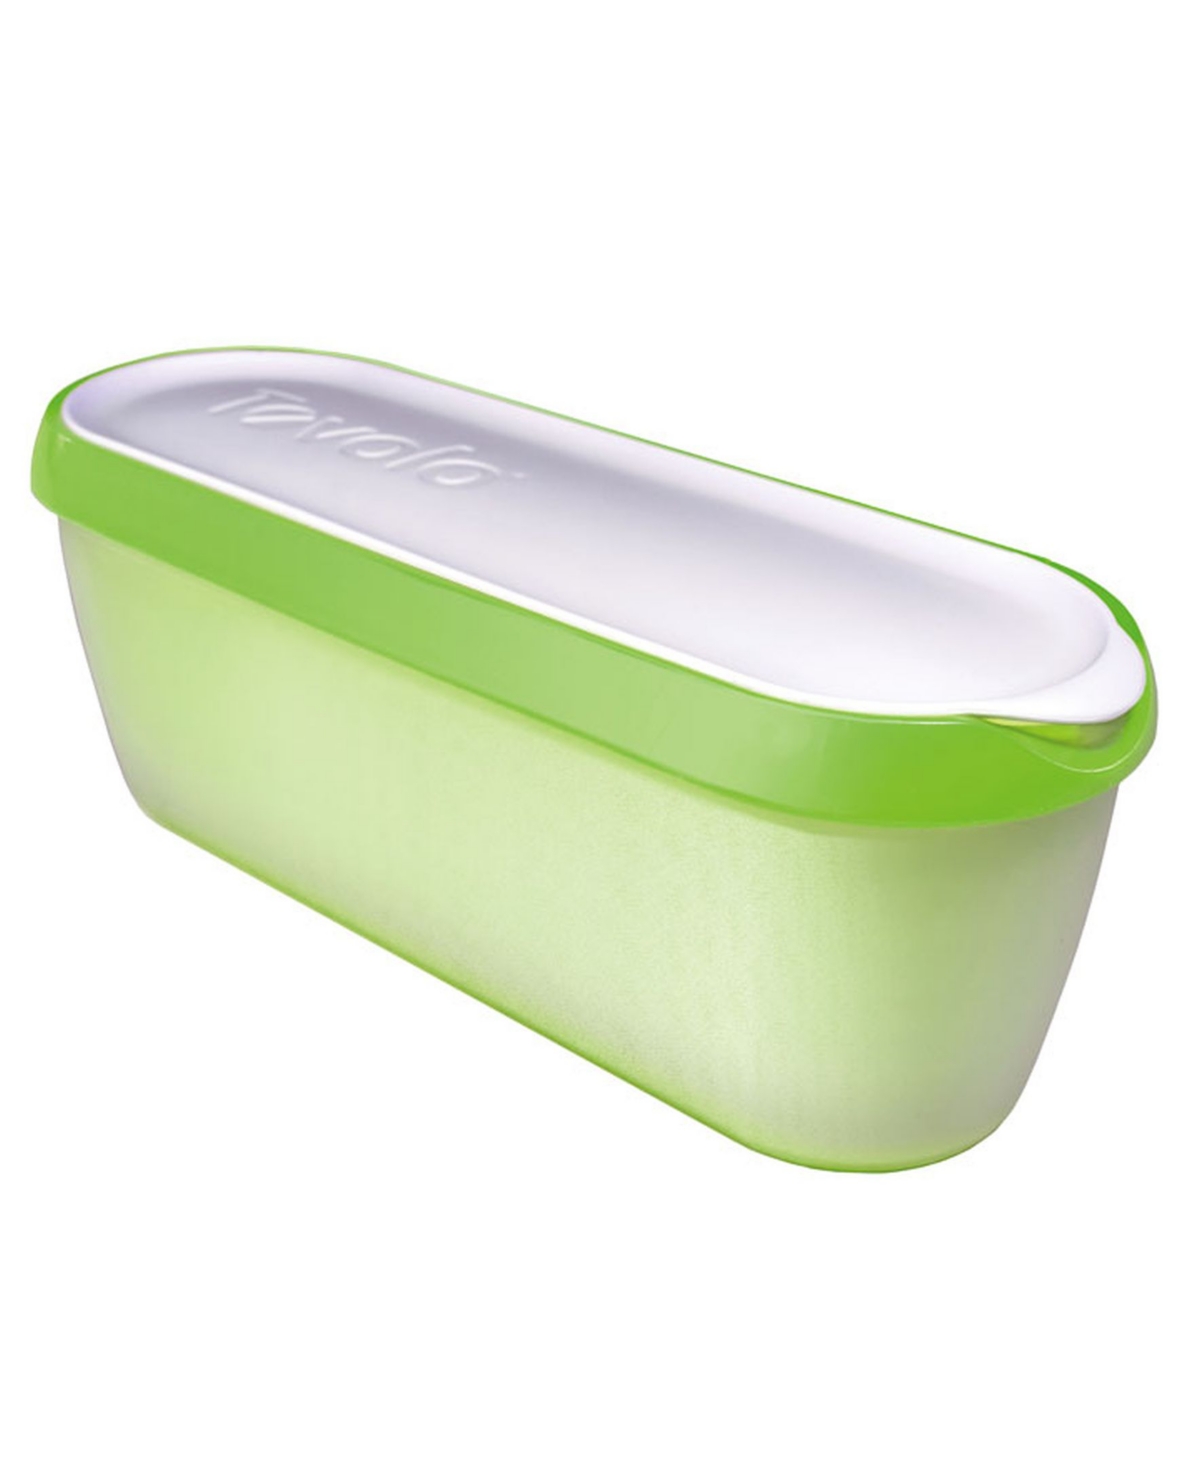 Glide-a-Scoop Ice Cream Tub, 1.5 Quart - Lime